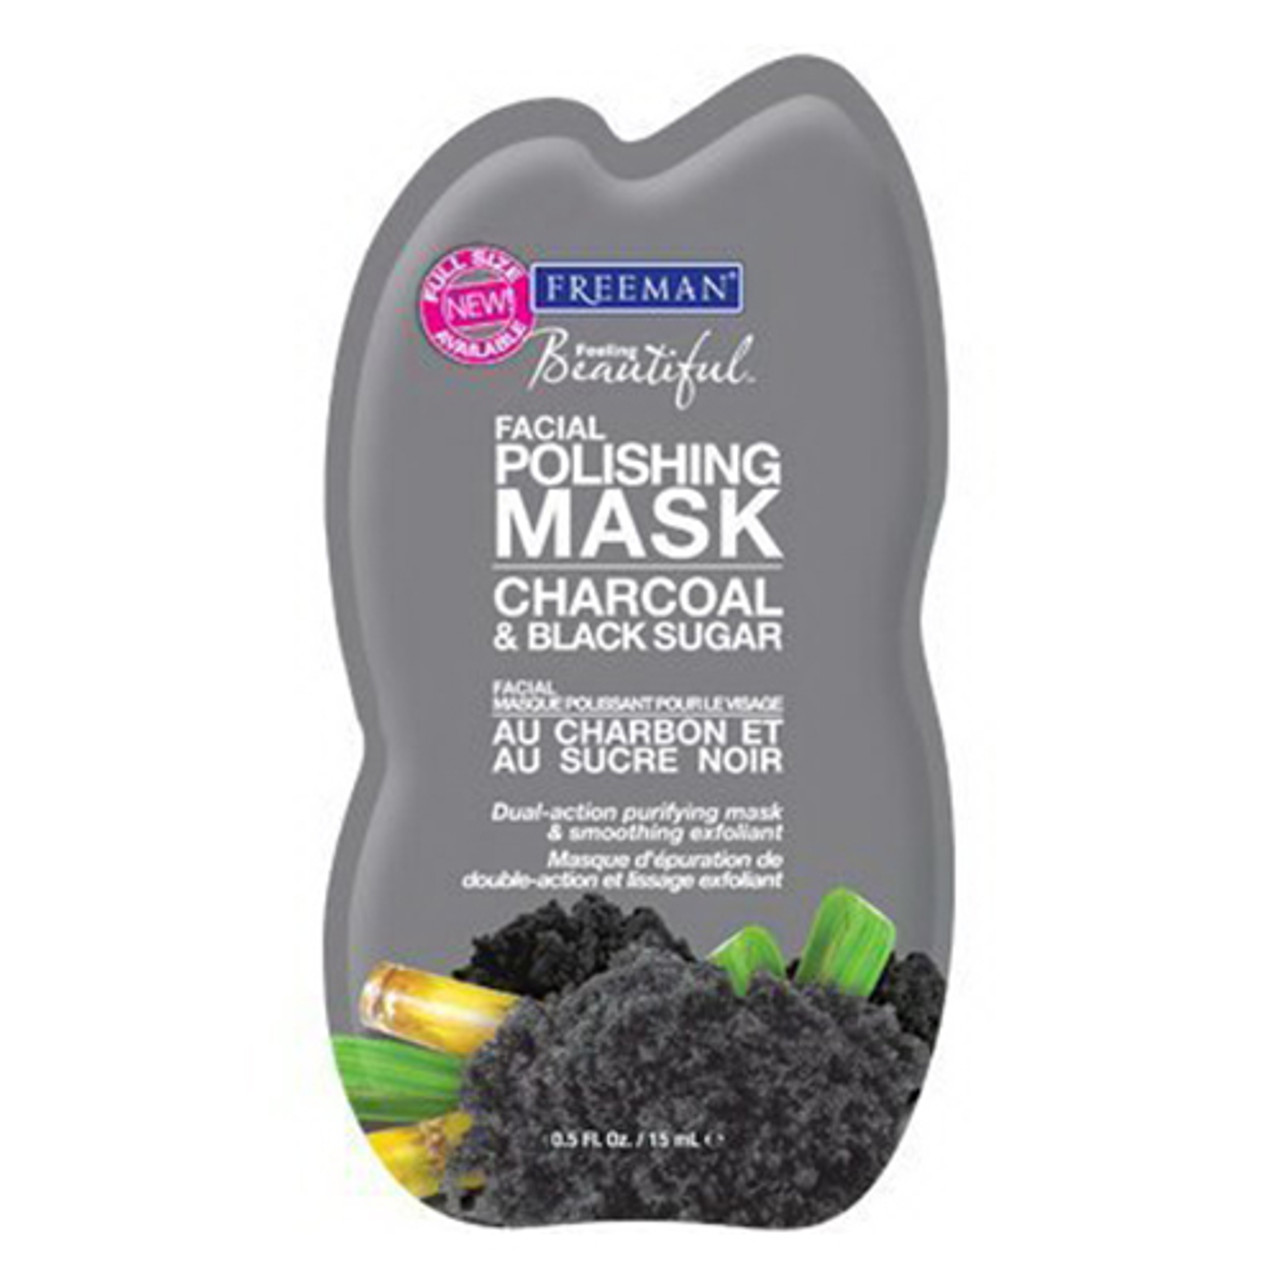 Freeman Feeling Polishing Mask Charcoal And Black Sugar, Travel 0.5 oz - myotcstore.com